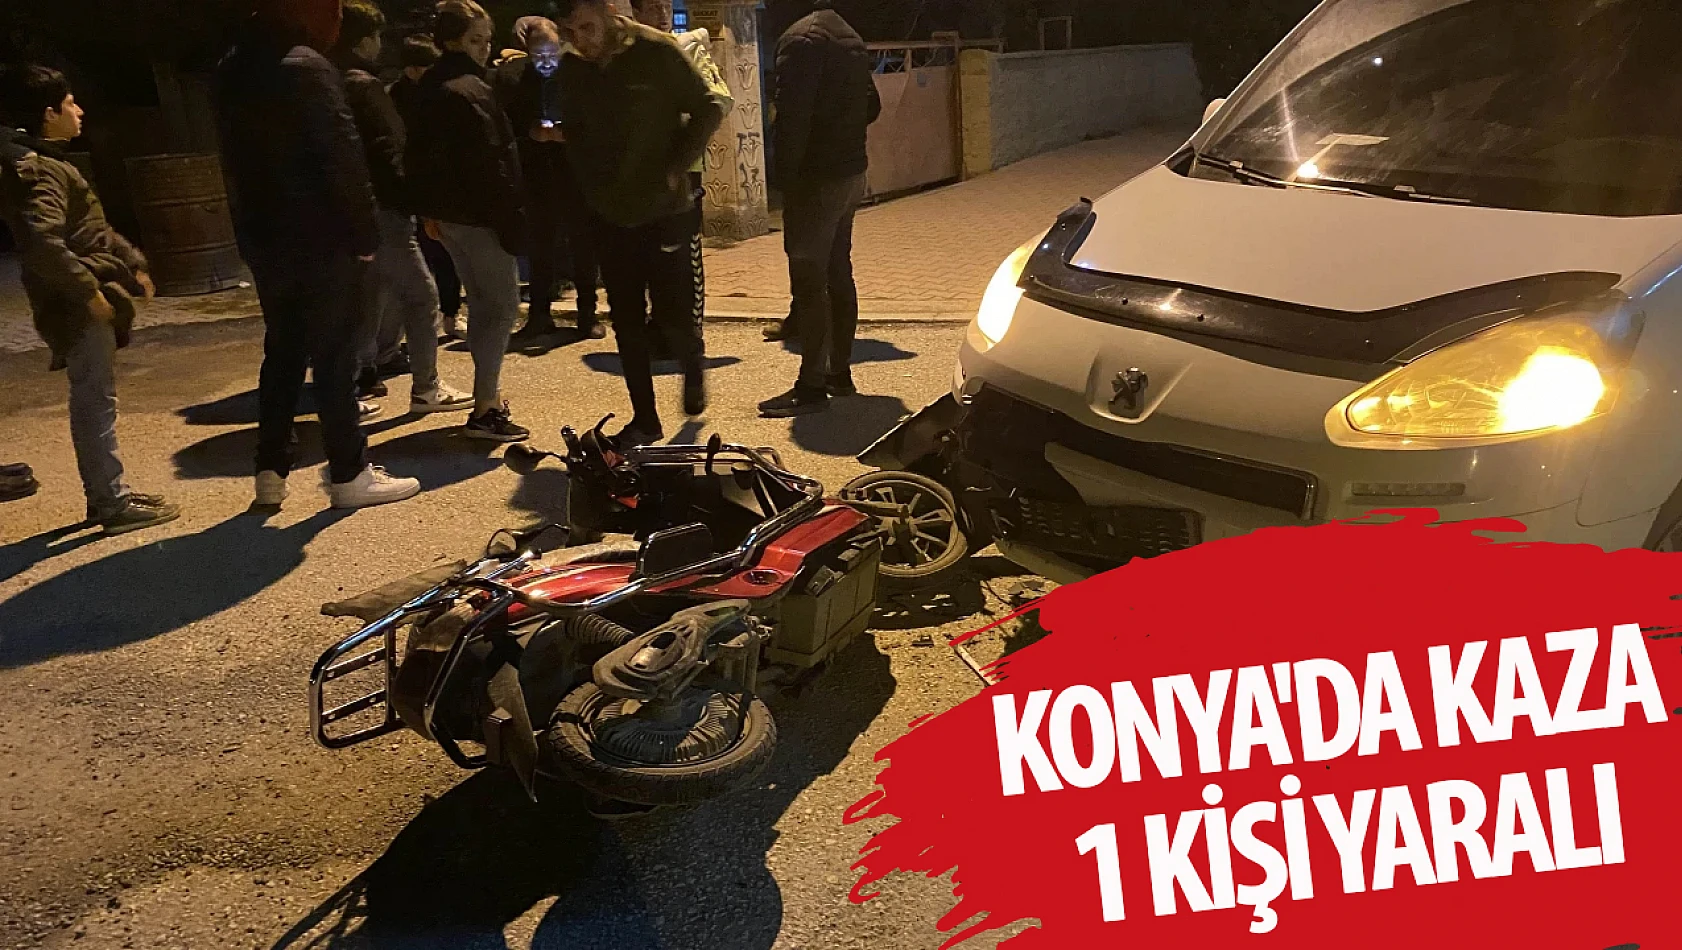 Konya'da kaza: 1 kişi yaralı